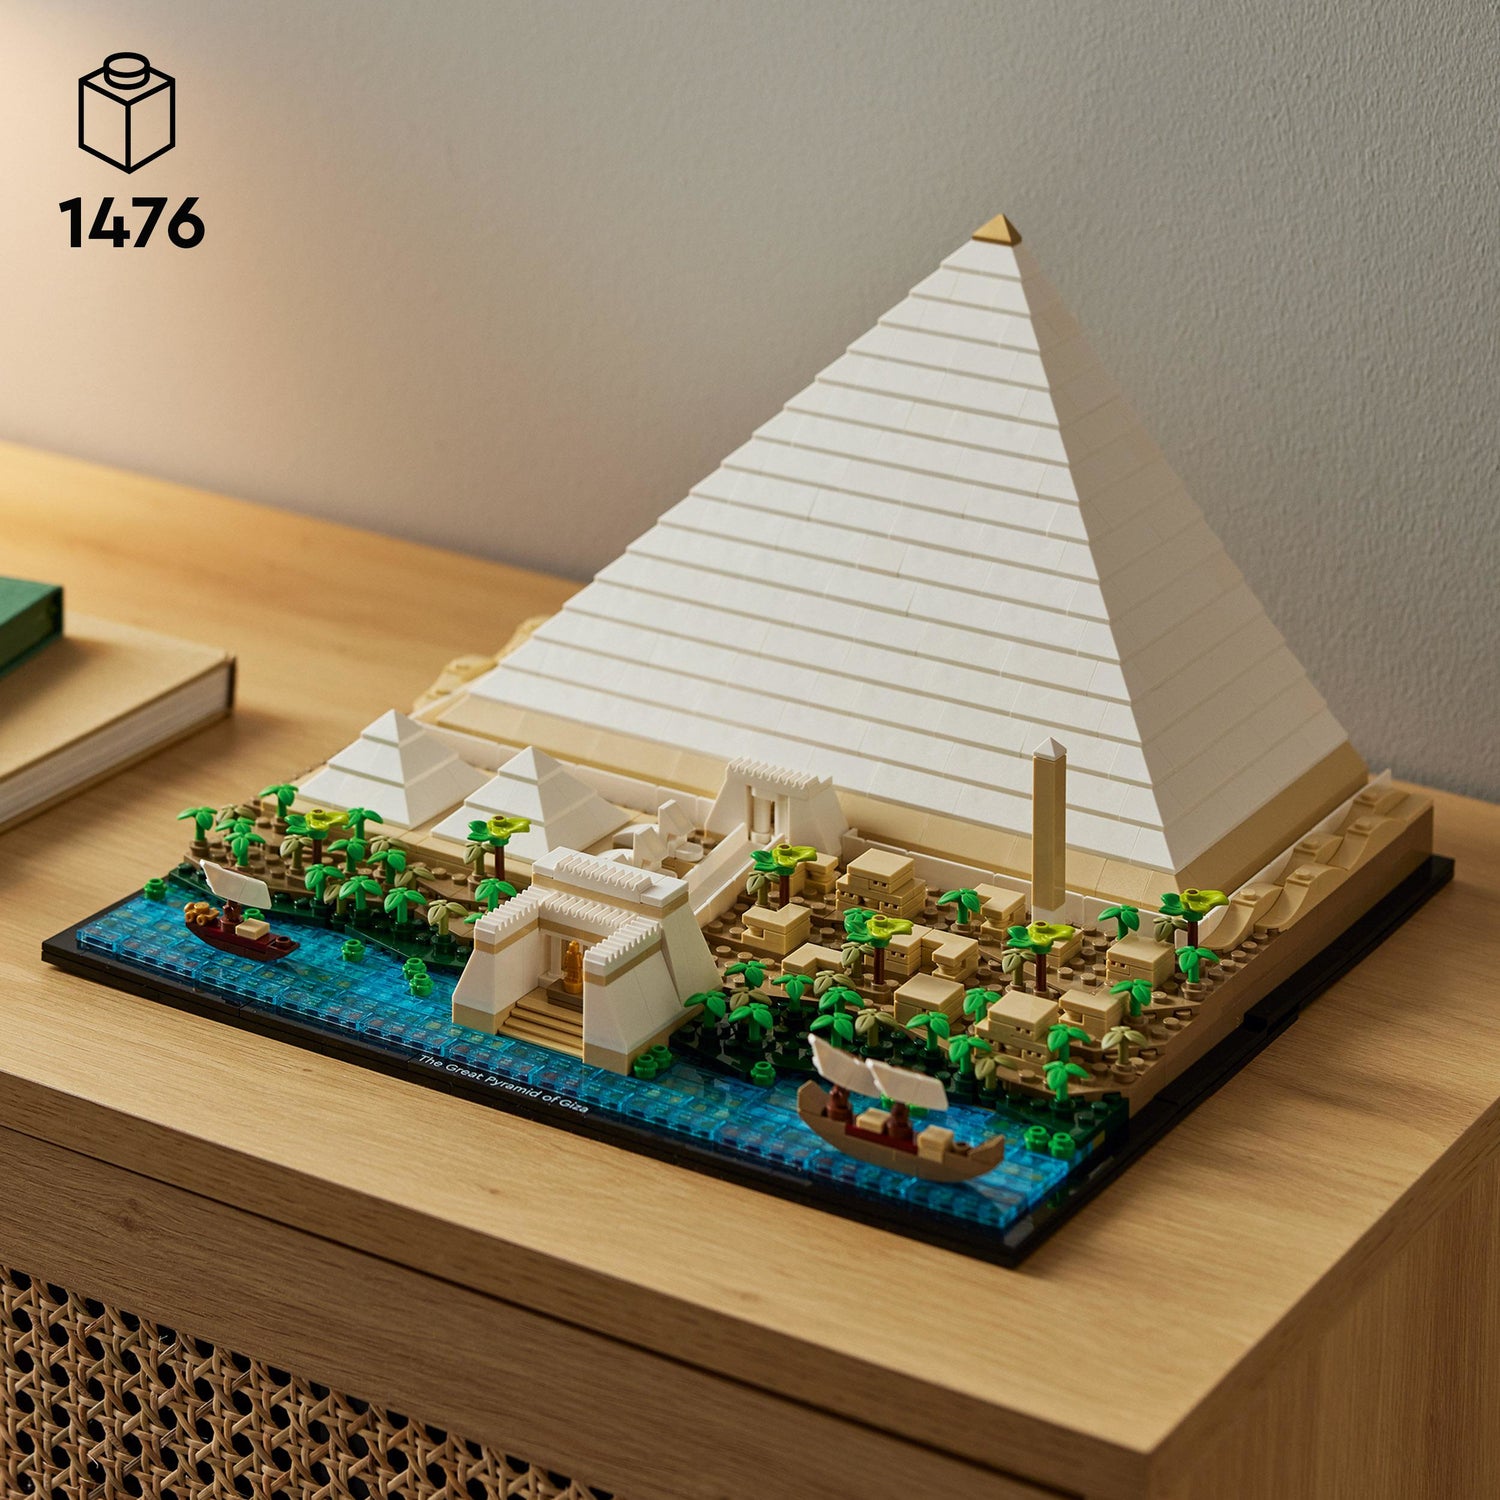 LEGO® Architecture Great Pyramid of Giza Set